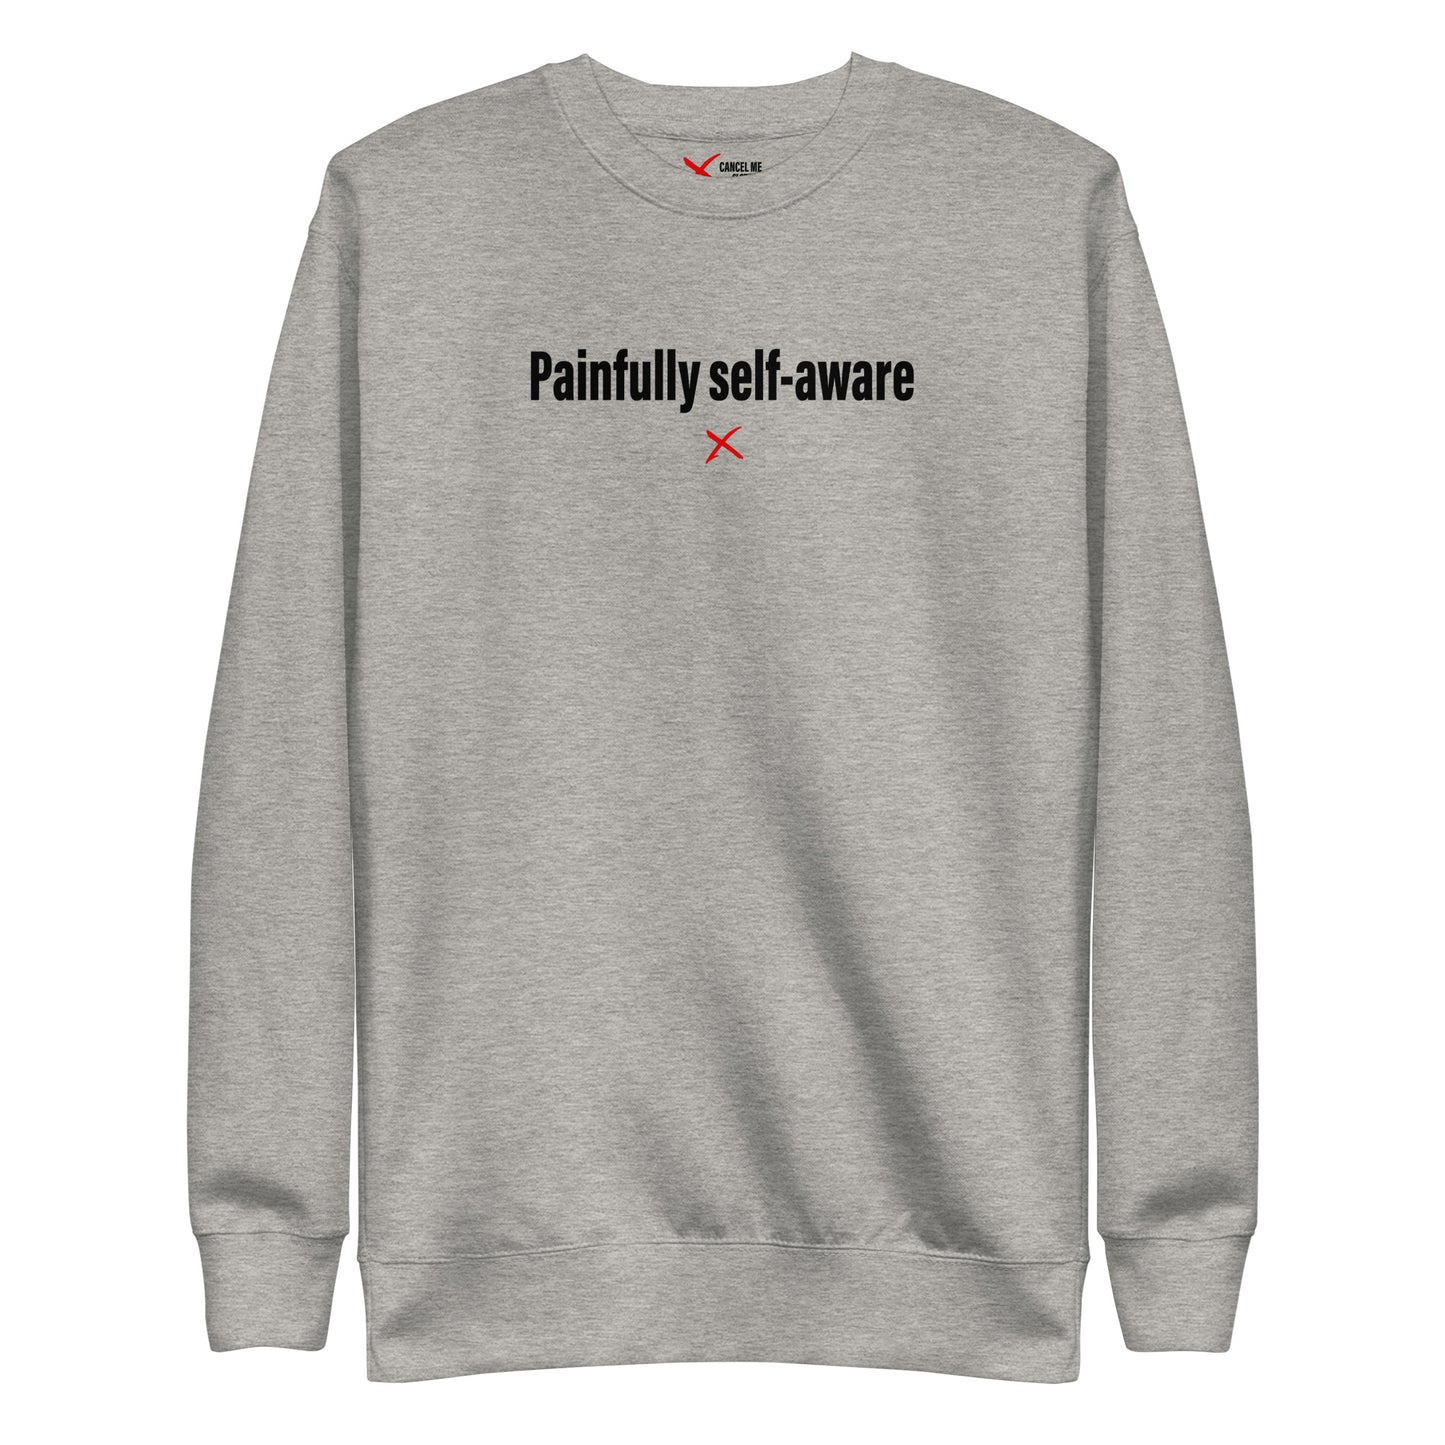 Painfully self-aware - Sweatshirt